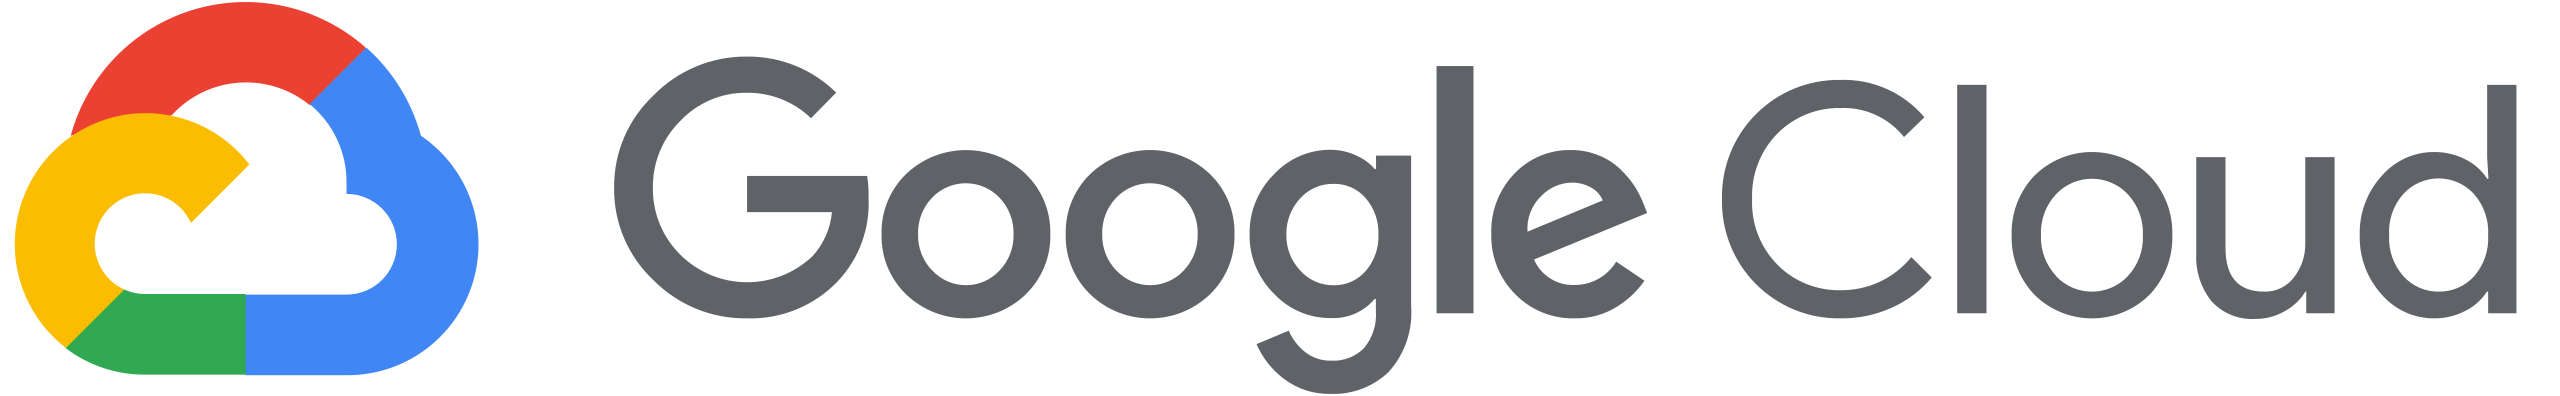 Google Cloud Logo Horizontal